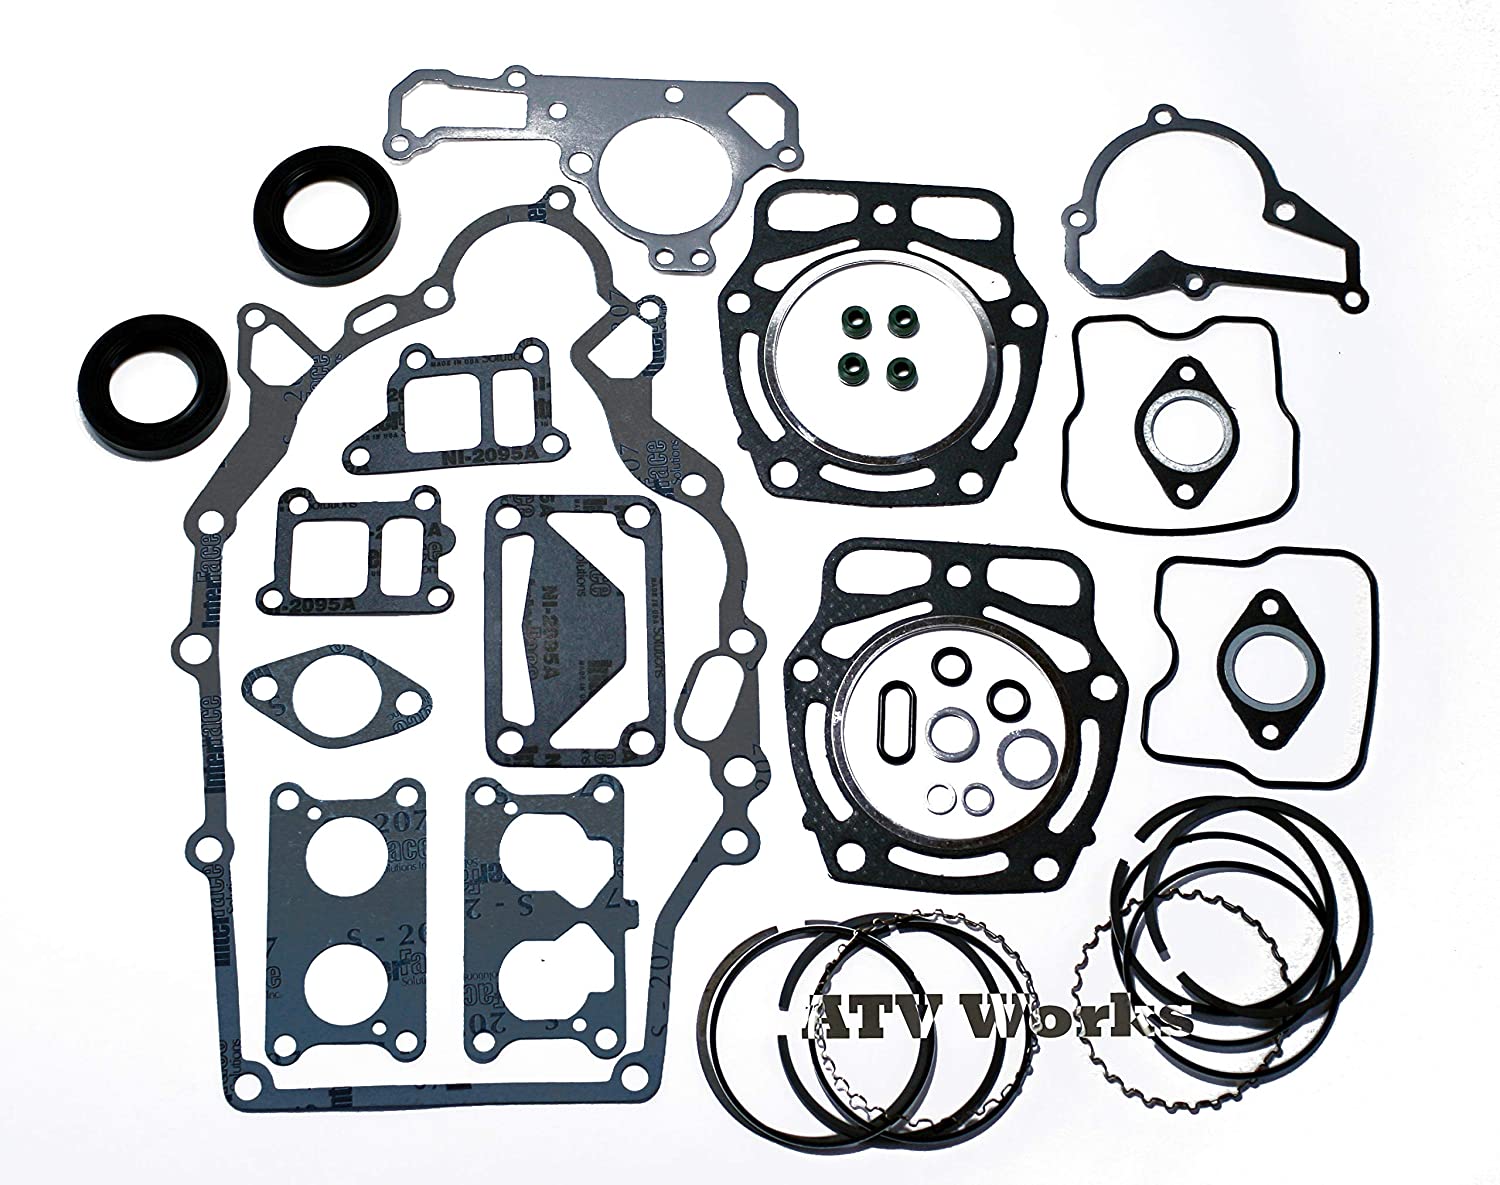 Kawasaki Mule KAF620 Engine Rebuild Kit with 2 Oils Seals & 2 Sets of Piston Rings OEM # 13008-6025